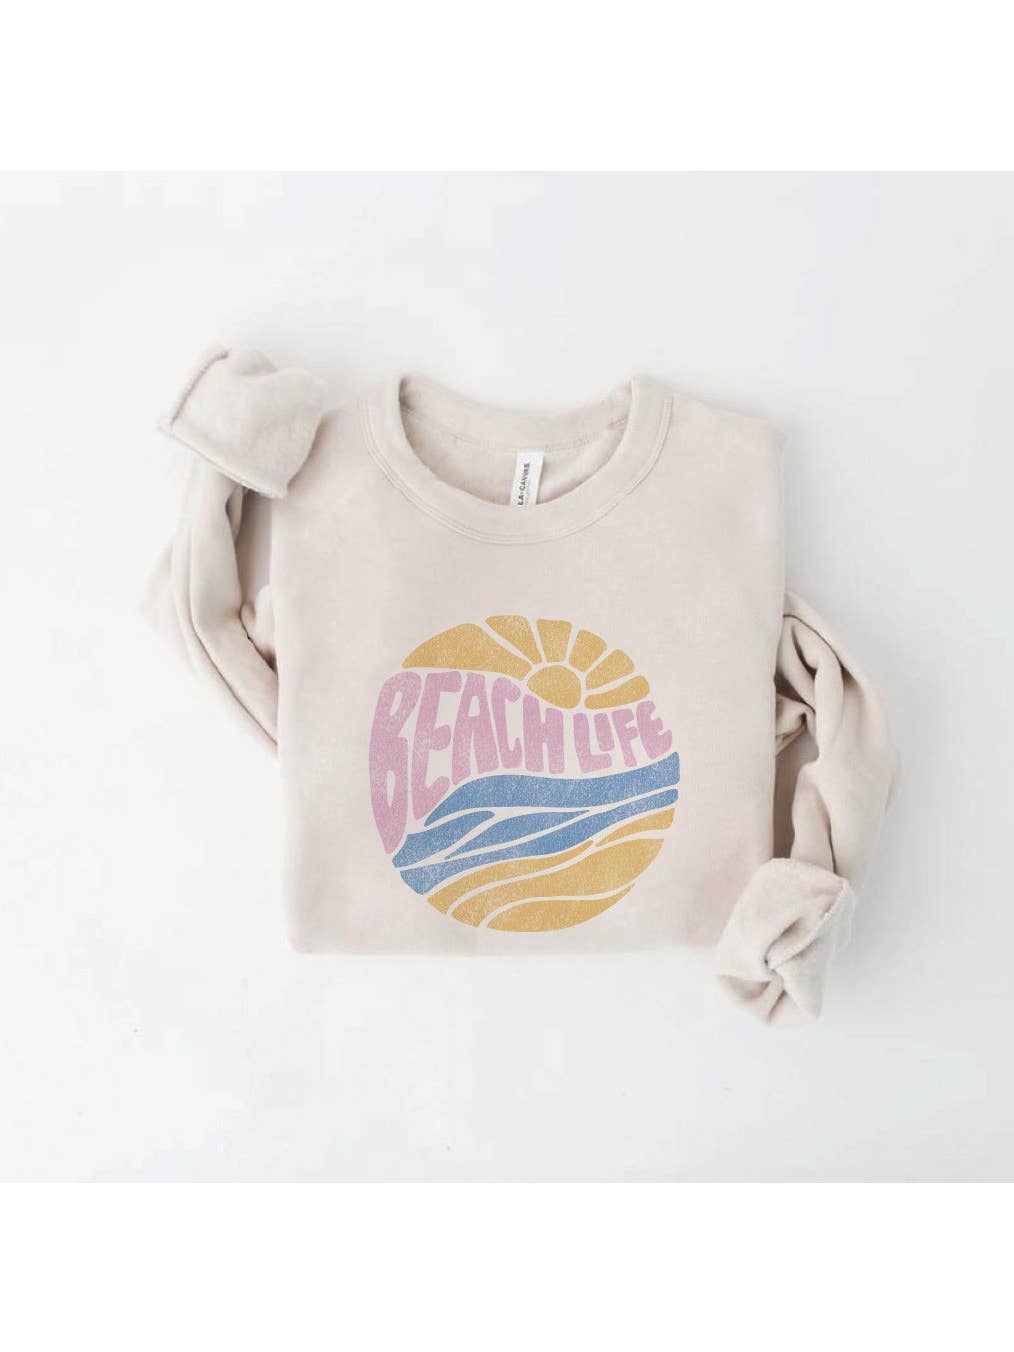 Beach Life Sweatshirt